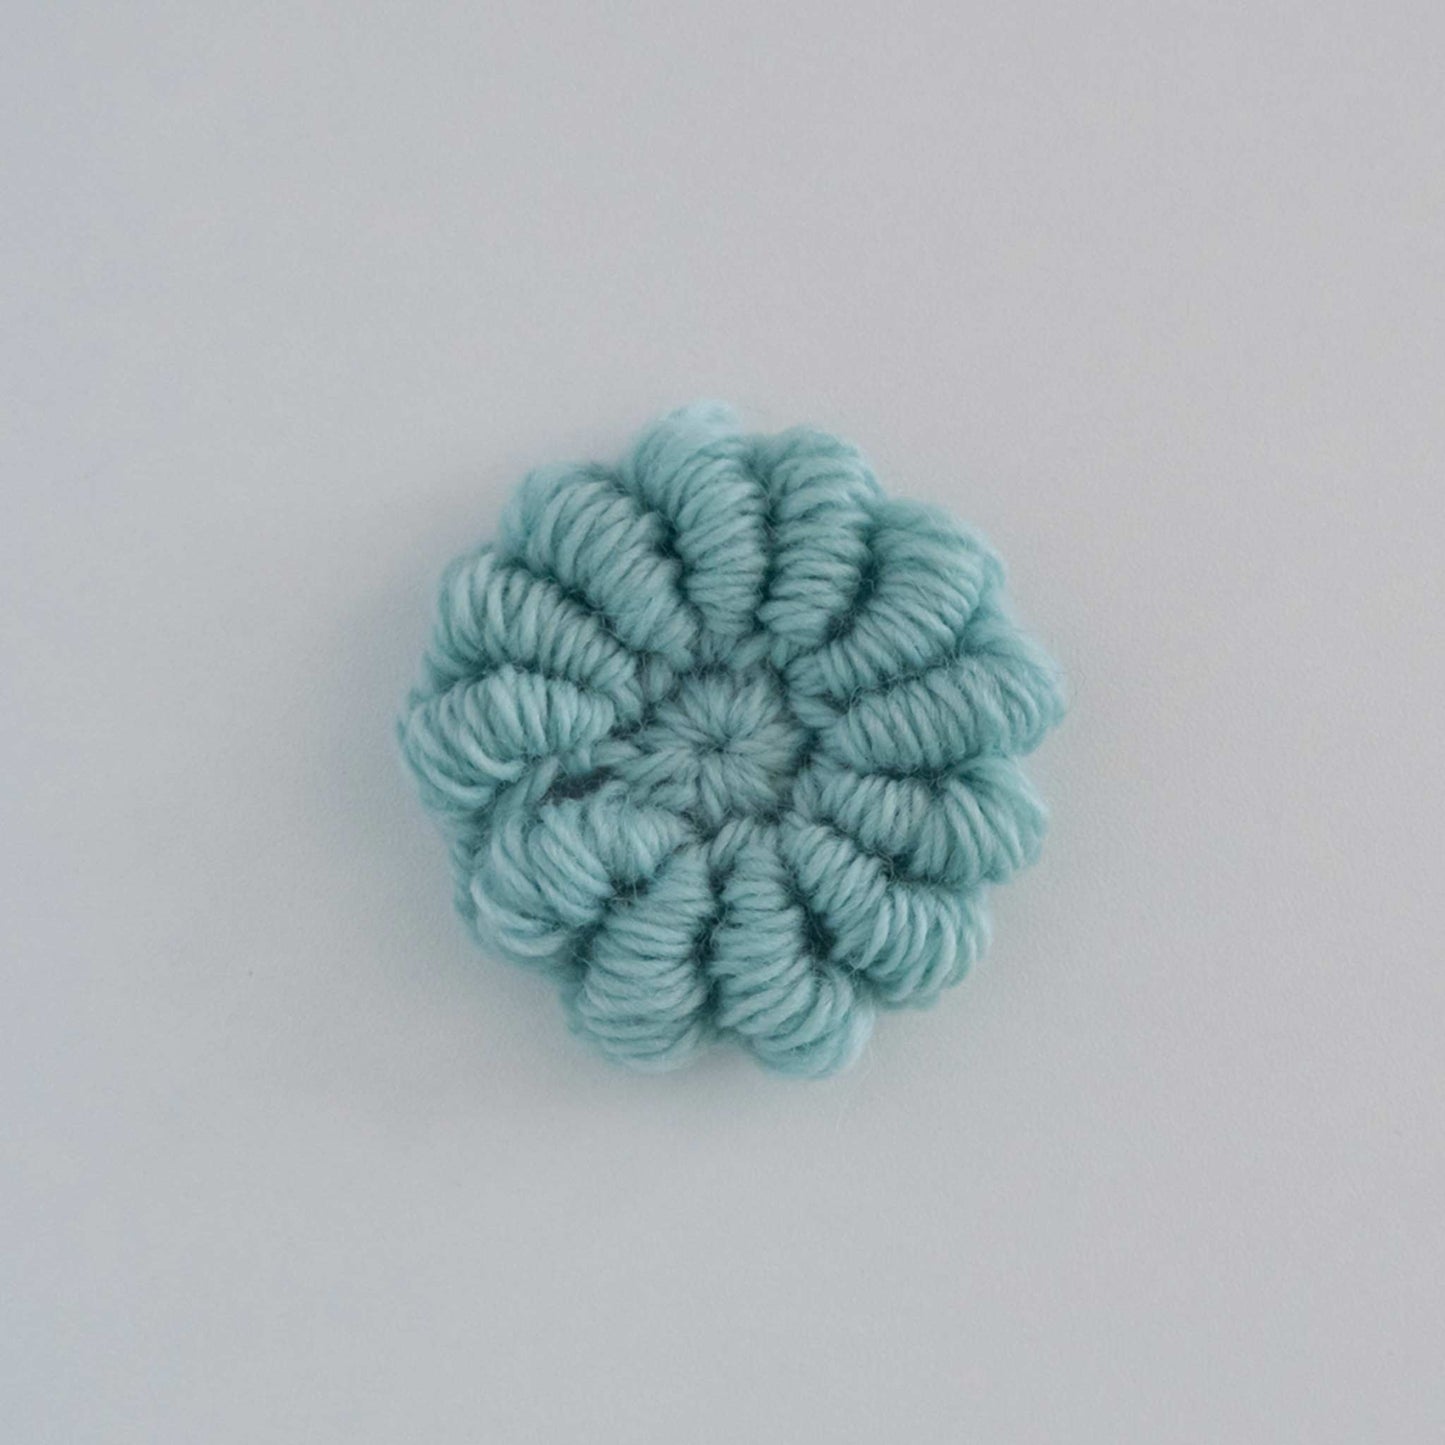 Bullion Stitch Crochet Flower PDF